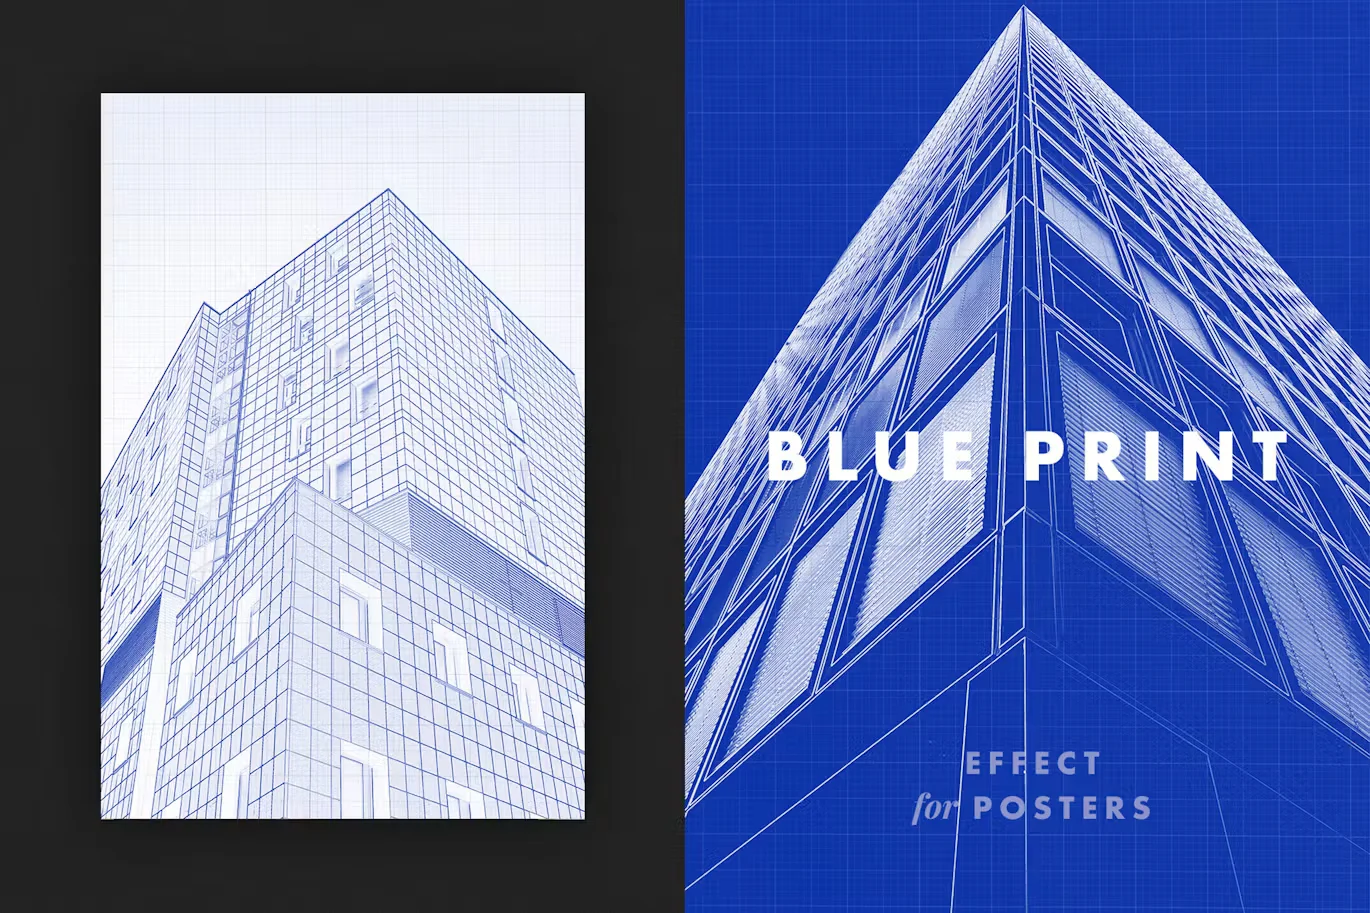 12 Photoshop Blueprint Actions & Effects